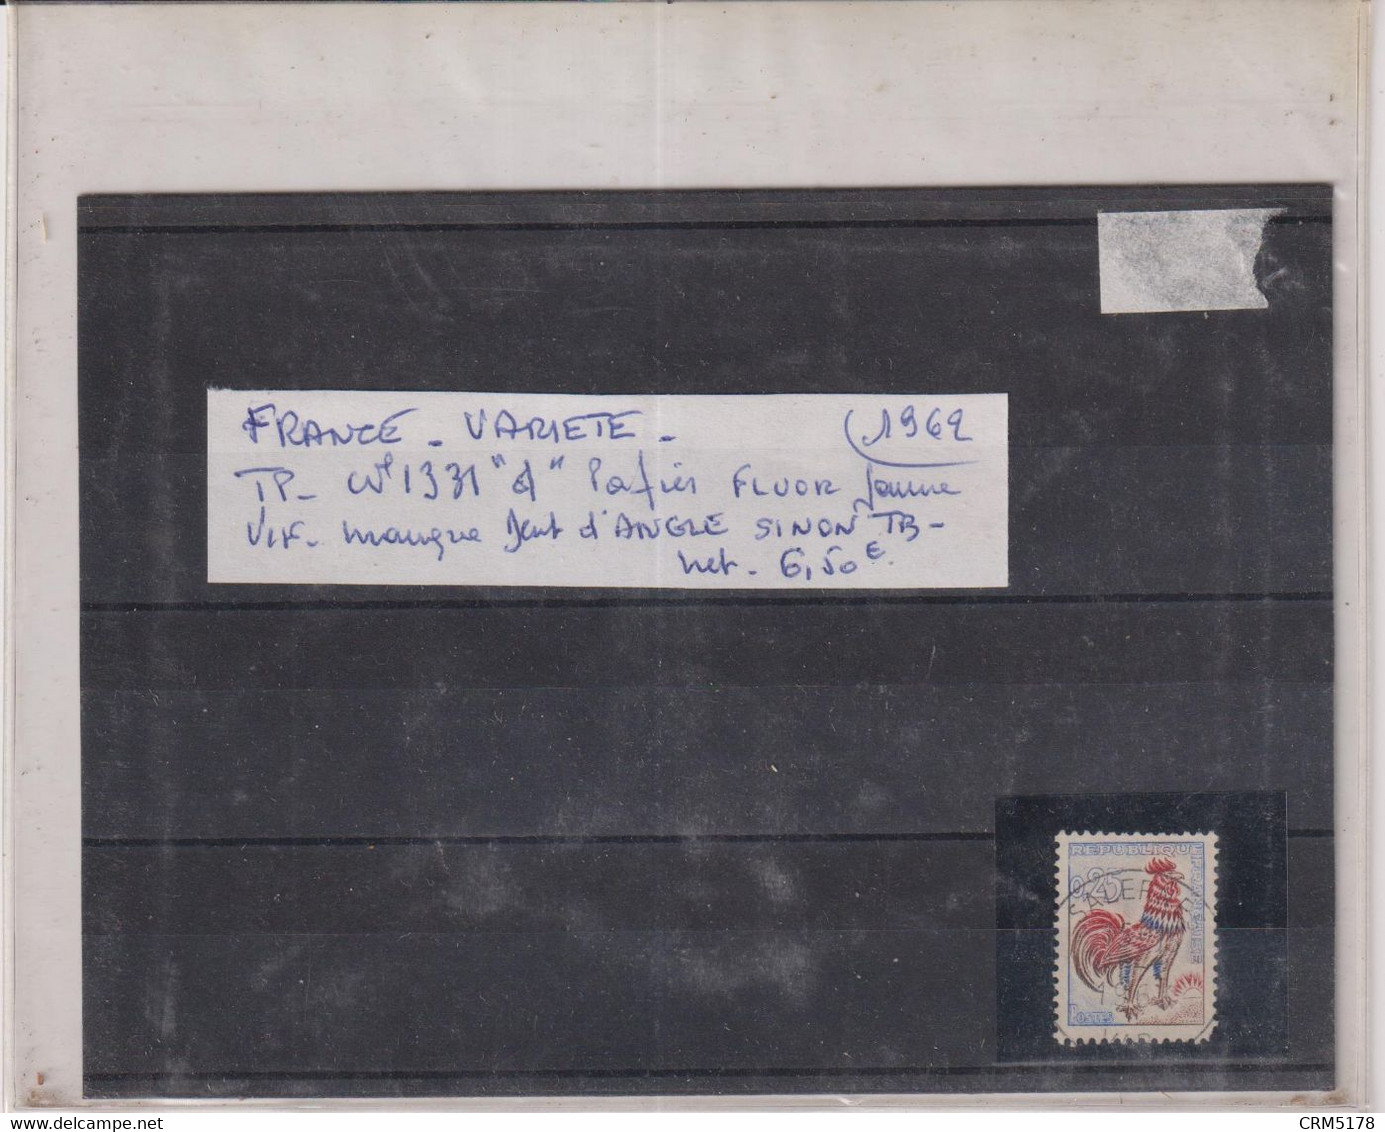 TP N°1331 "d" Papier Fluor Jaune Vif-manque Dent D'angle Sinon TB-1962 - Used Stamps